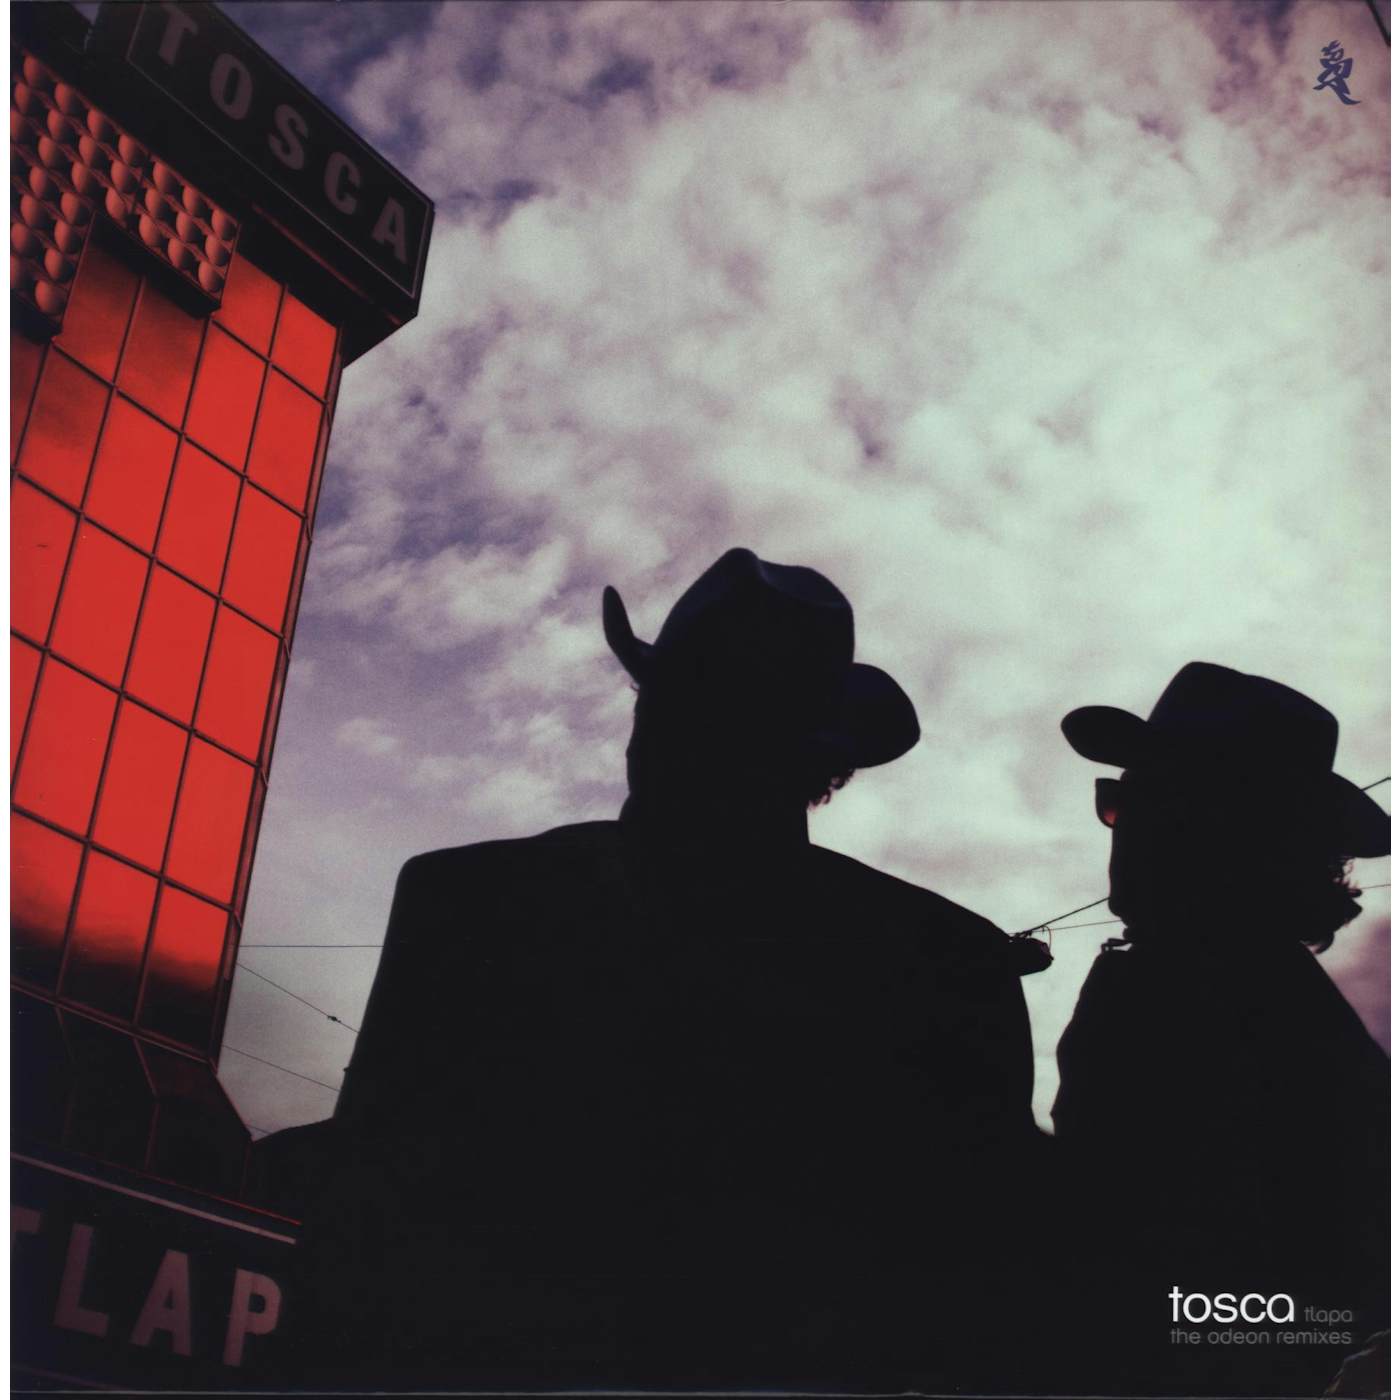 Tosca TLAPA: THE ODEON REMIXES Vinyl Record